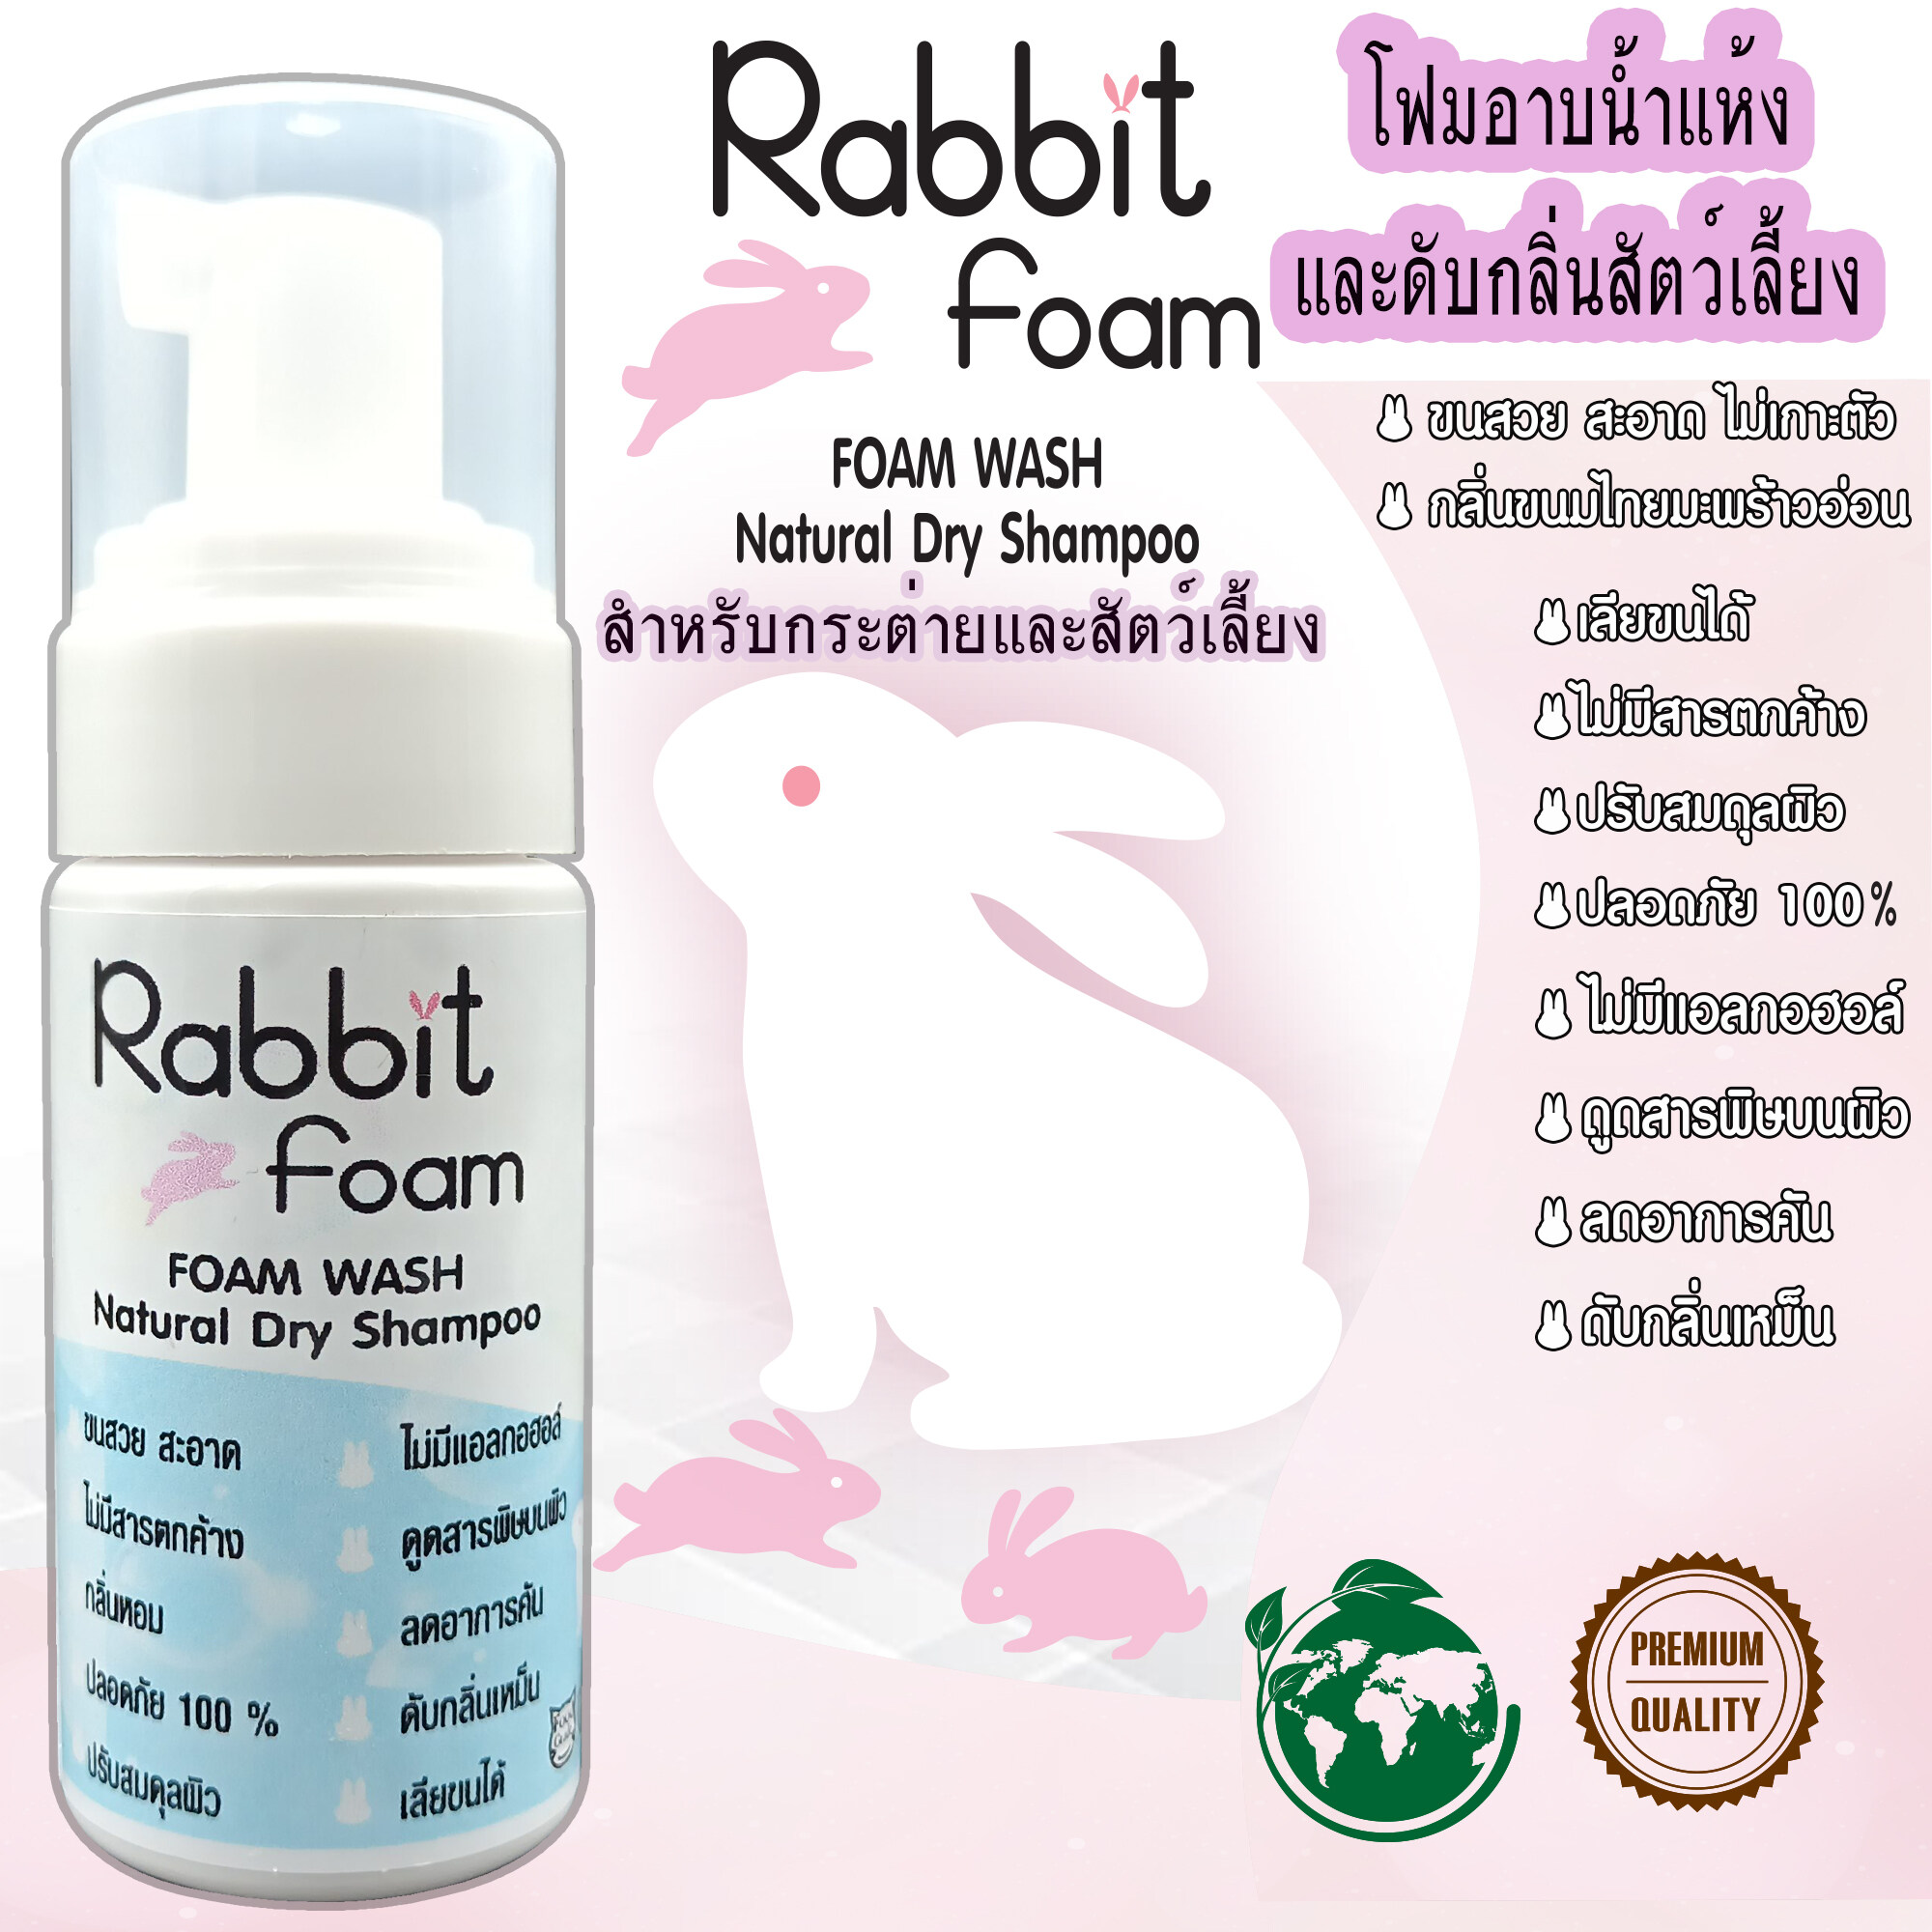 Rabbit Foamแรบบิทโฟม โฟมอาบน้ำแห้งสูตรอ่อนโยน60ML. อาบสะอาด เลียขนได้ กลิ่นหอมละมุน ขนสวยคุณภาพจากแร่ธาตุธรรมชาติที่ได้จากน้ำแร่คุณภาพสูง